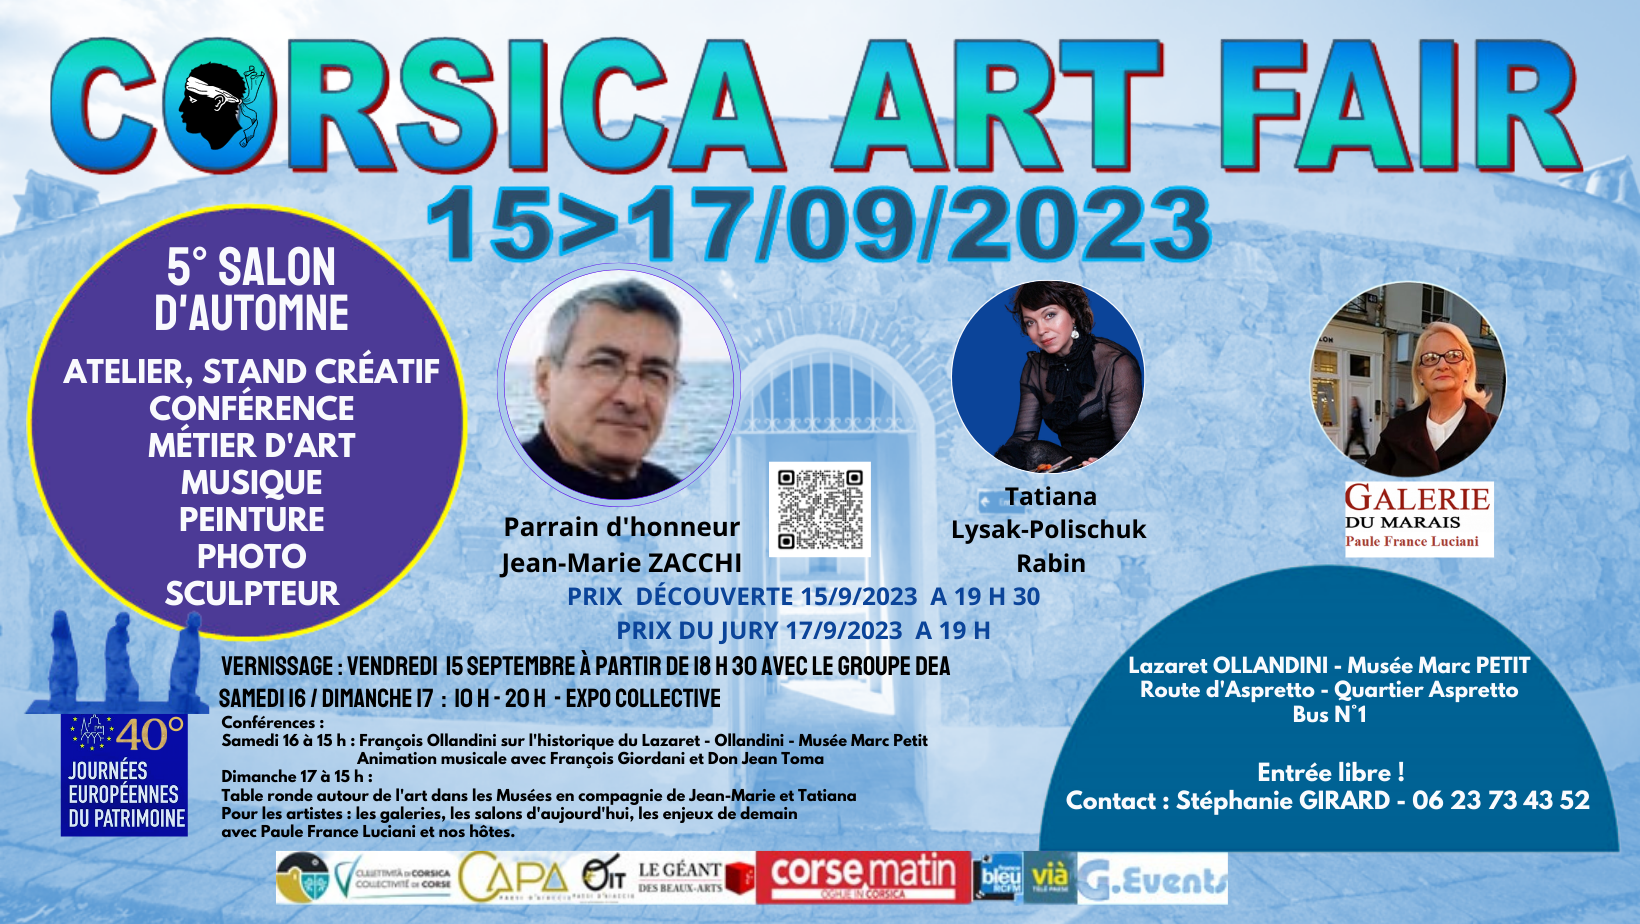 Corsica Art Fair - Automne